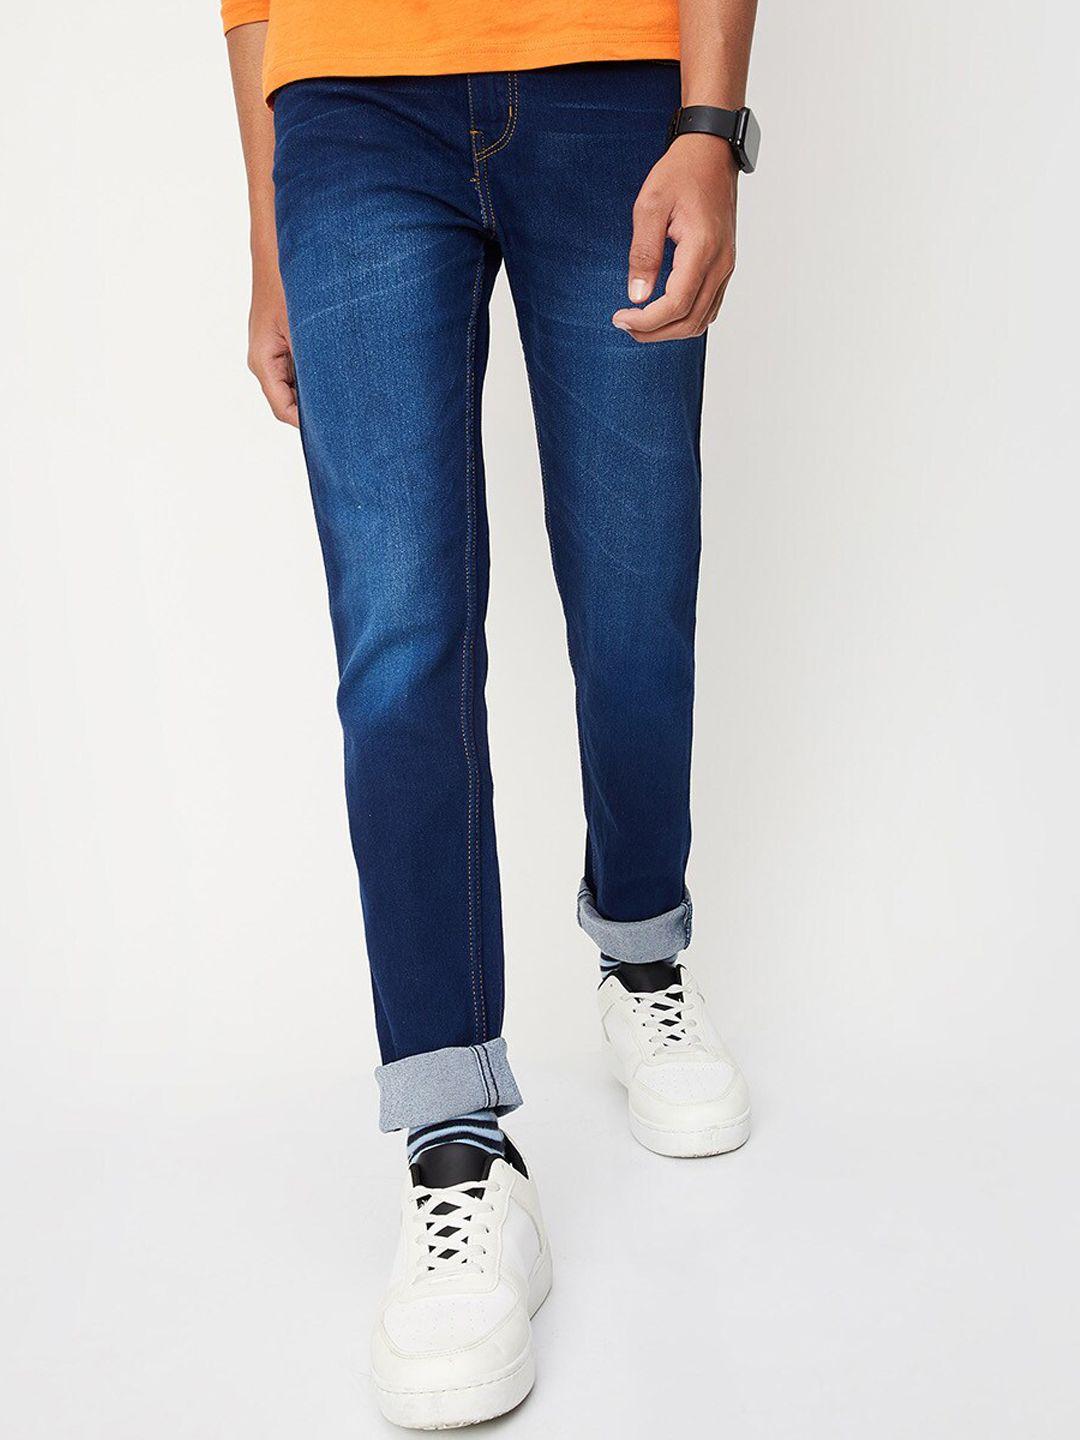 max-boys-blue-light-fade-jeans